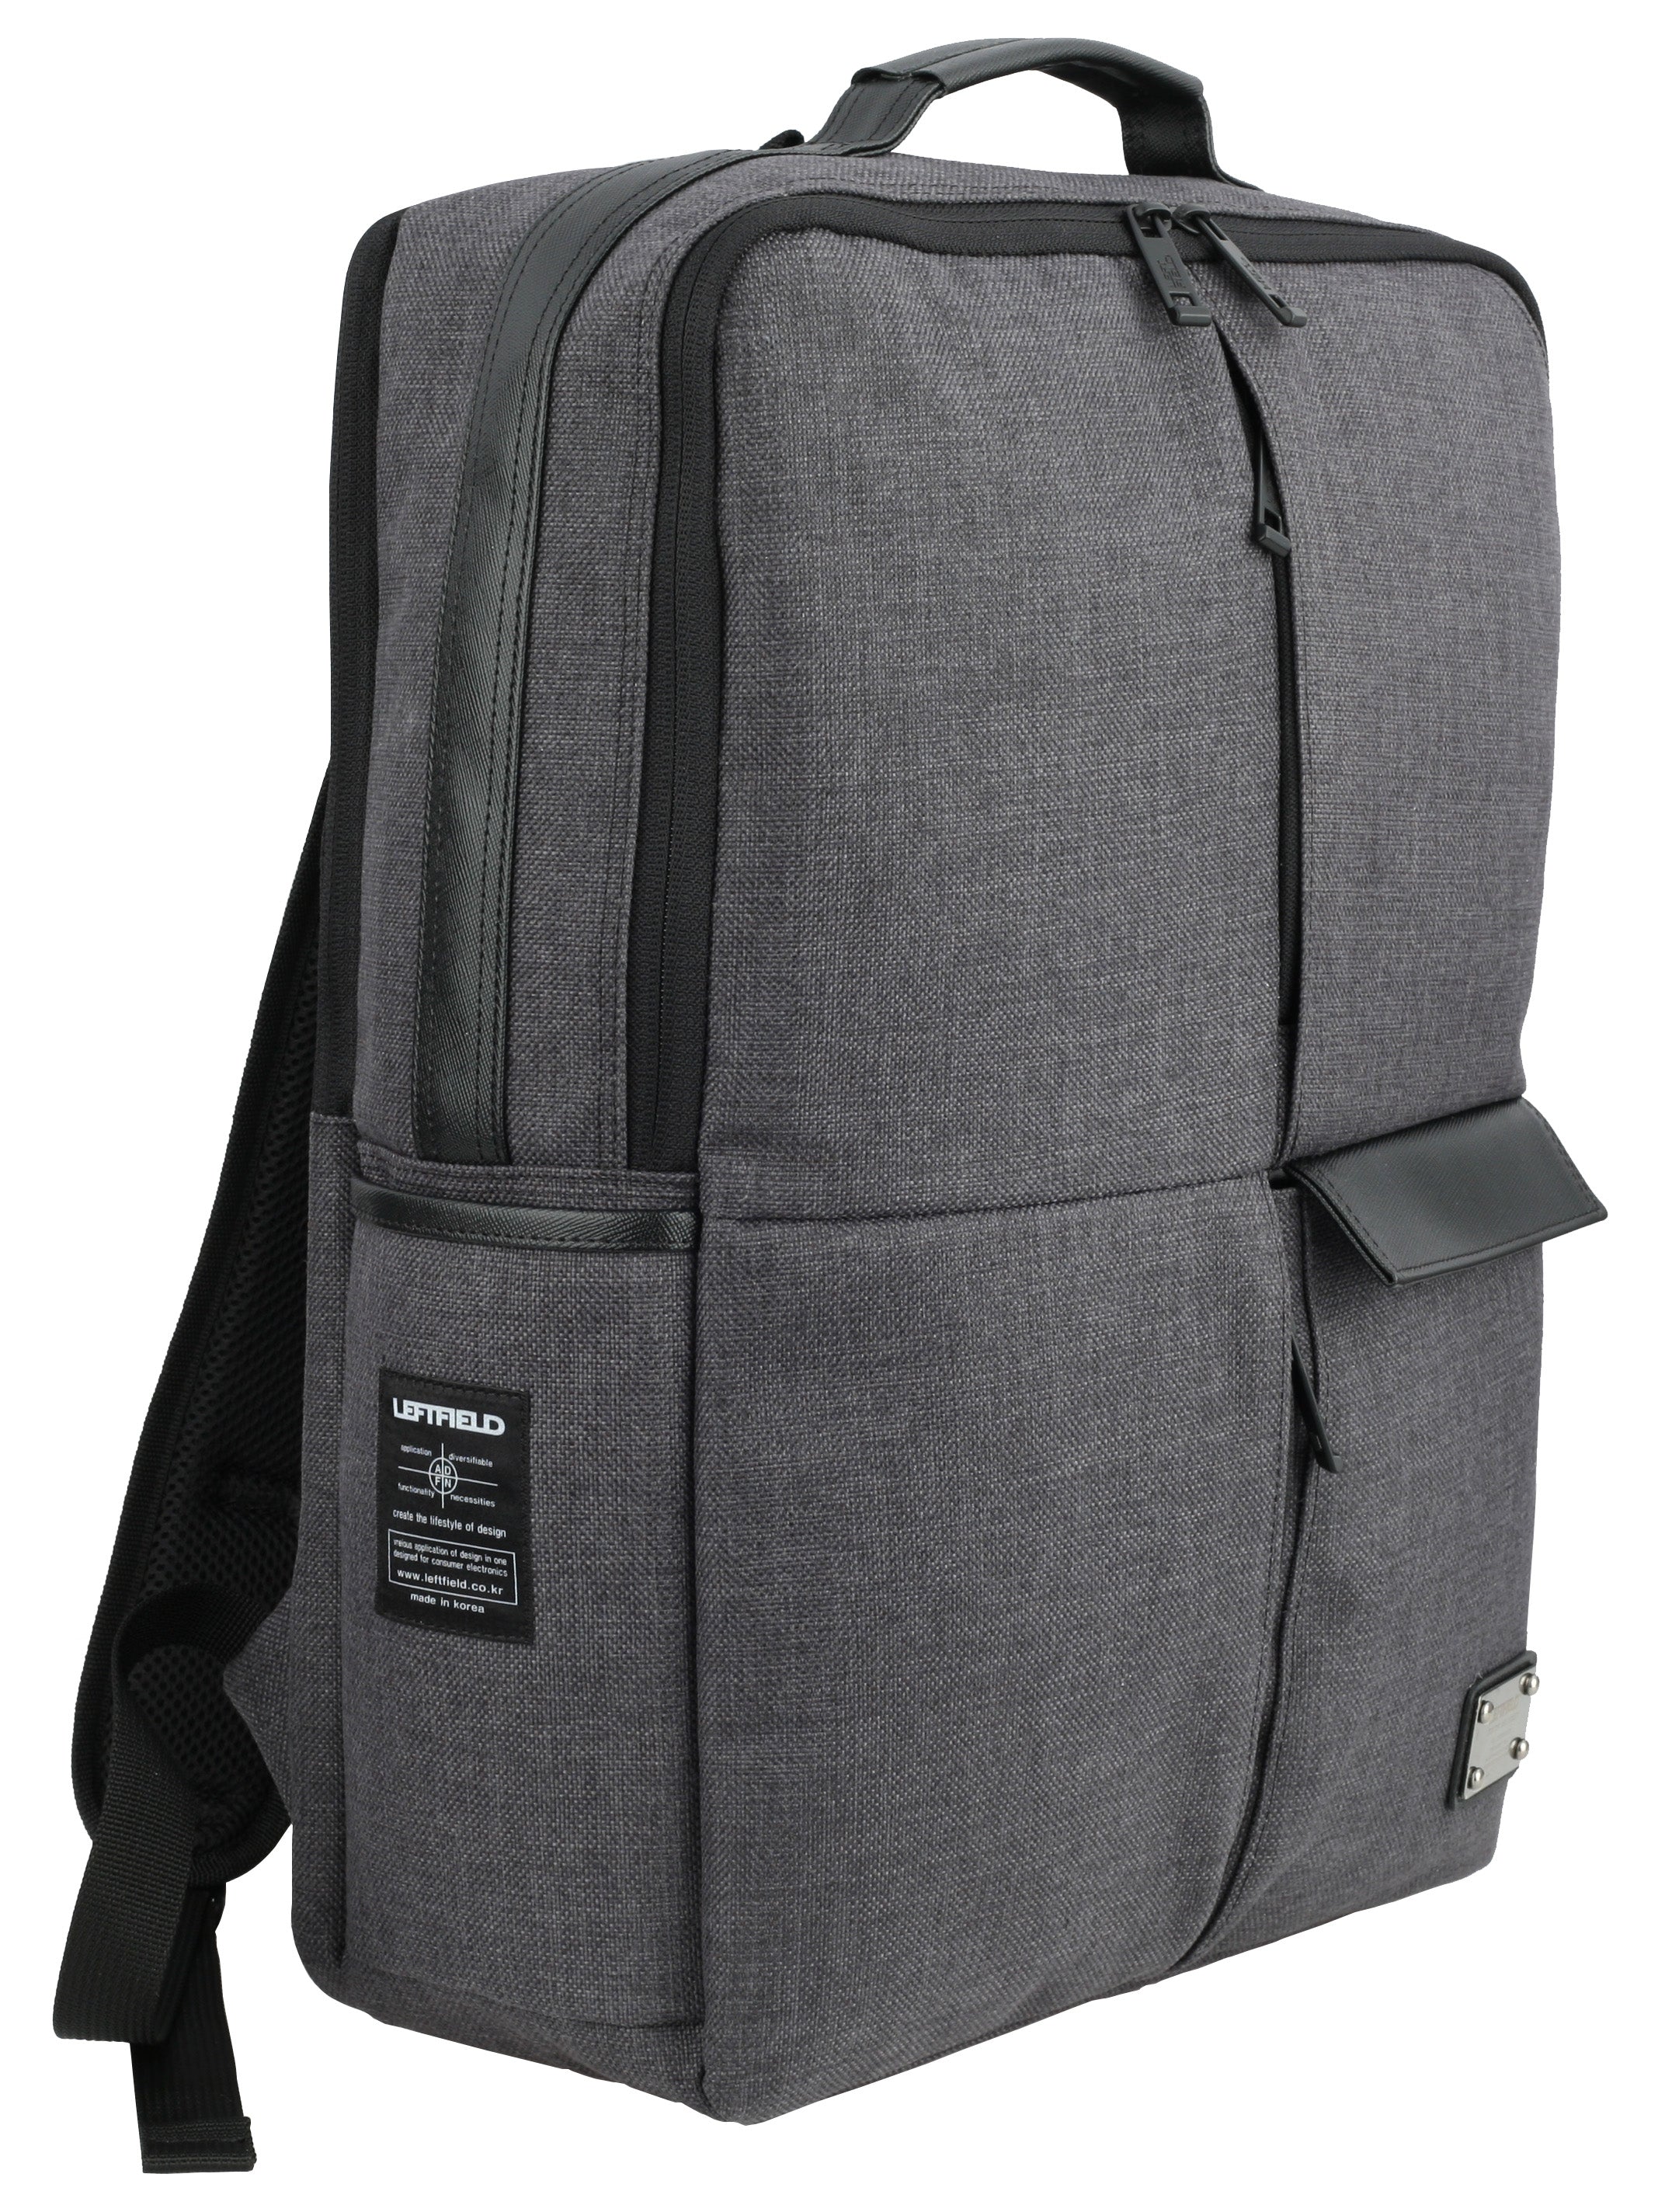 Black Canvas Casual Daypacks School Backpacks